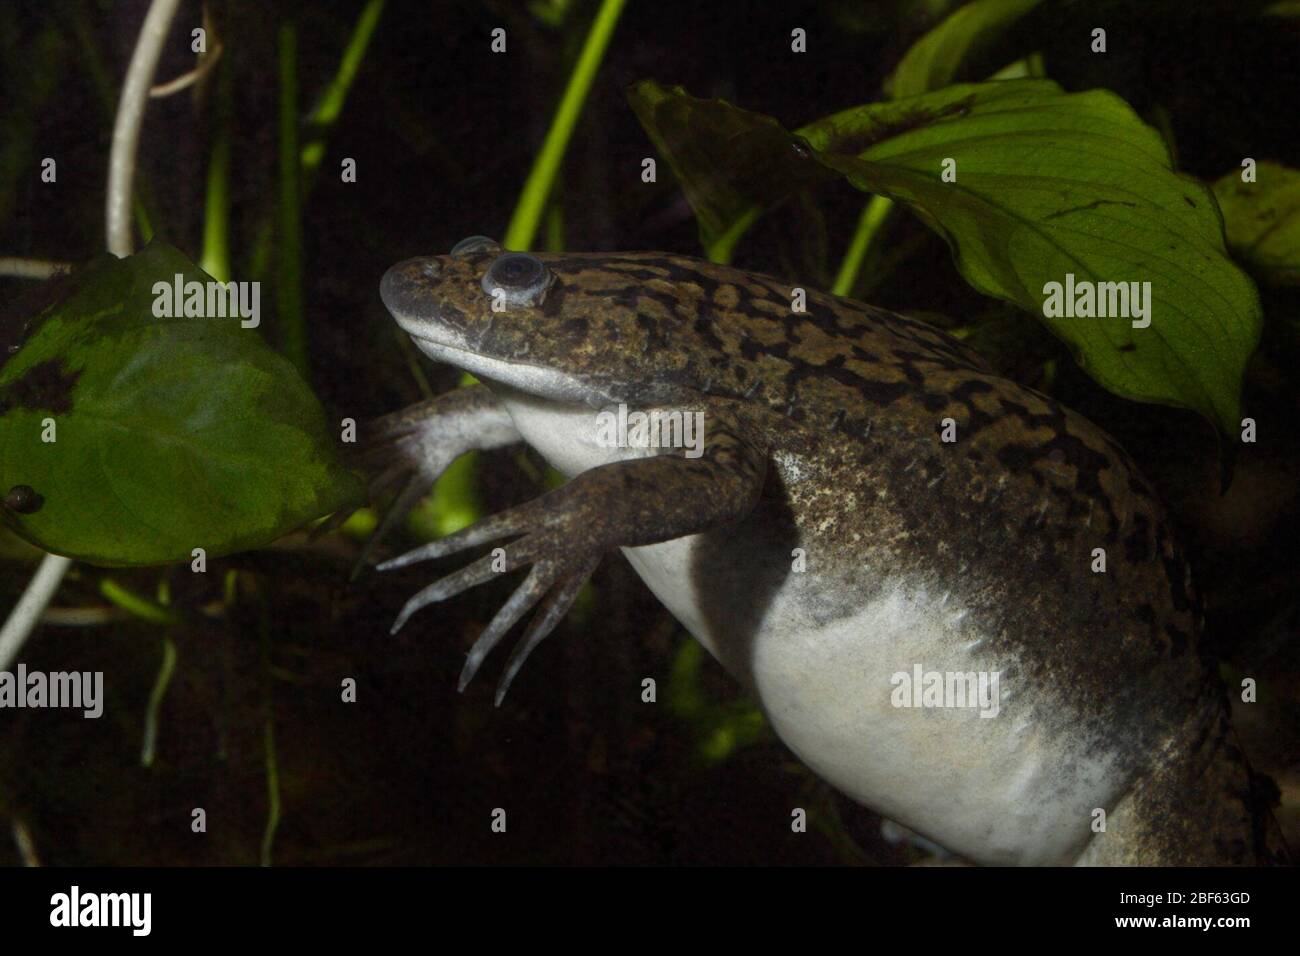 African Clawed Frog. Species: laevis Genus: Xenopus Family: Pipidae Order: Anura Class: Amphibia Phylum: Chordata Kingdom: Animalia Amphibian Stock Photo